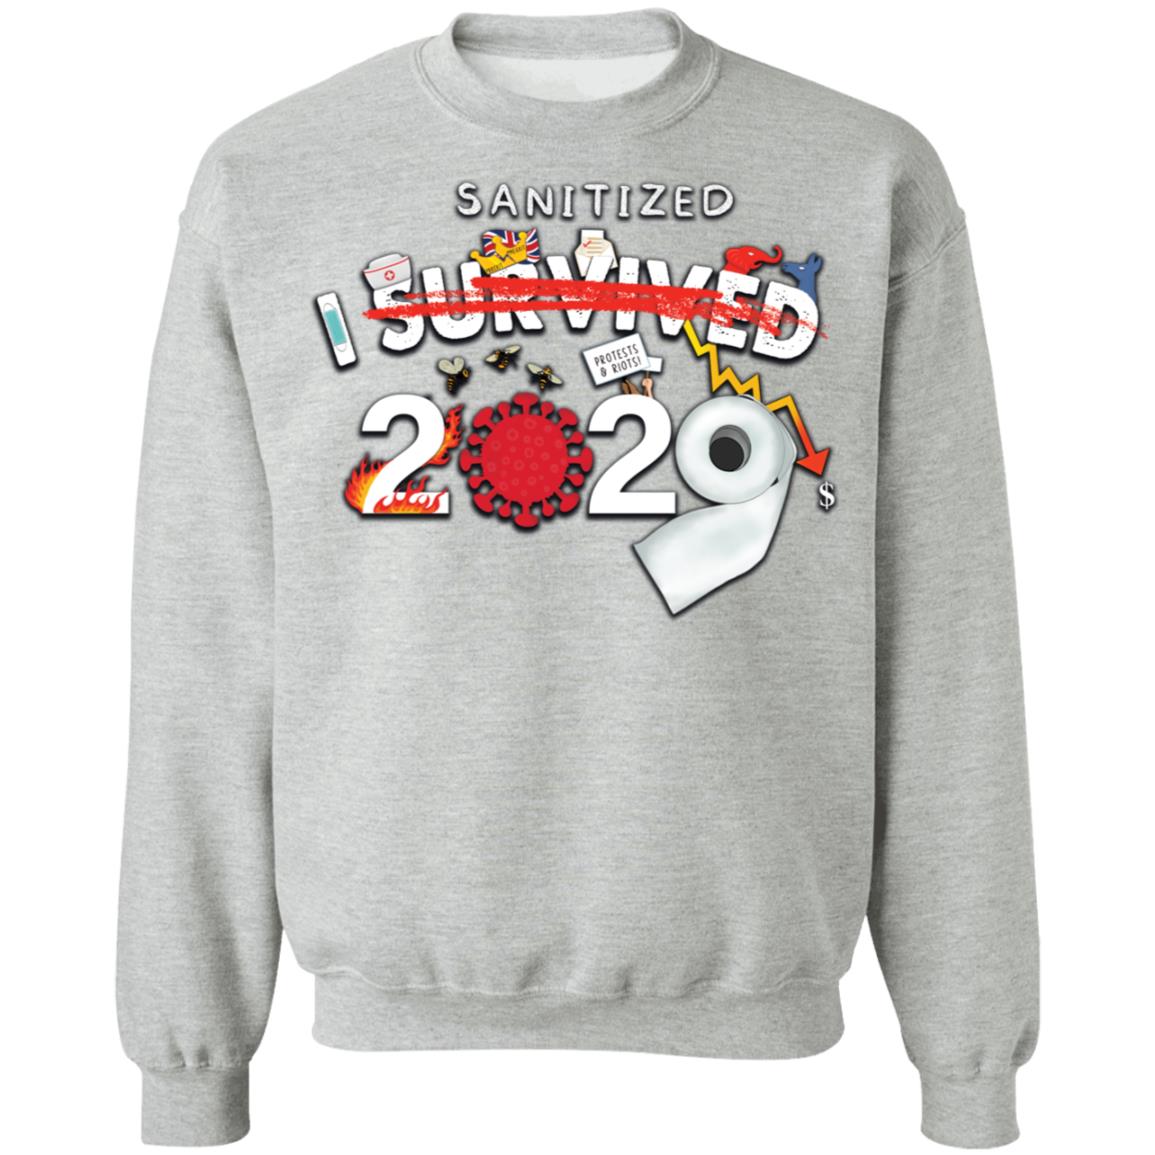 I Sanitized 2020 - Crewneck Pullover Sweatshirt